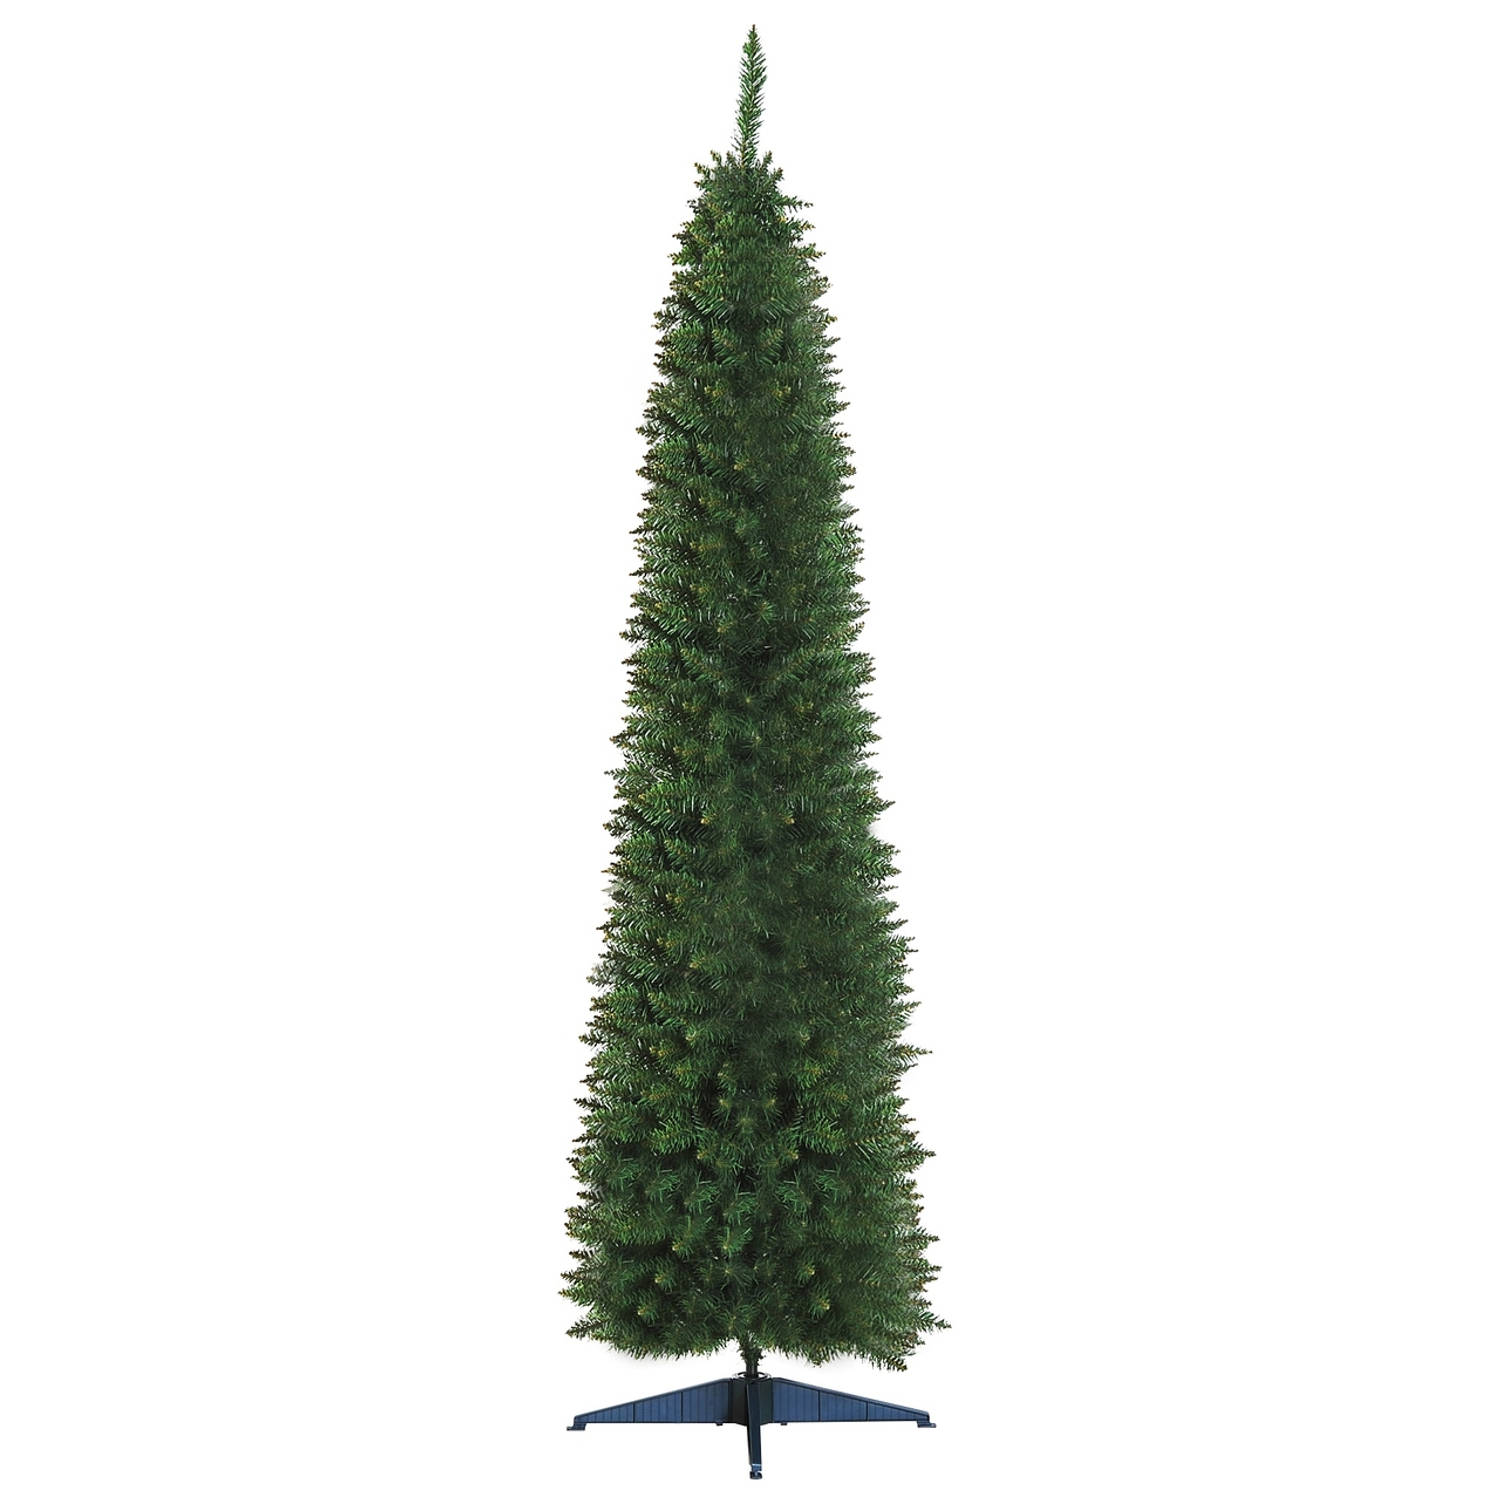 ChristmasGoodz - Kunstkerstboom - Smalle Kunstkerstboom - Smalle kerstboom - 210 cm